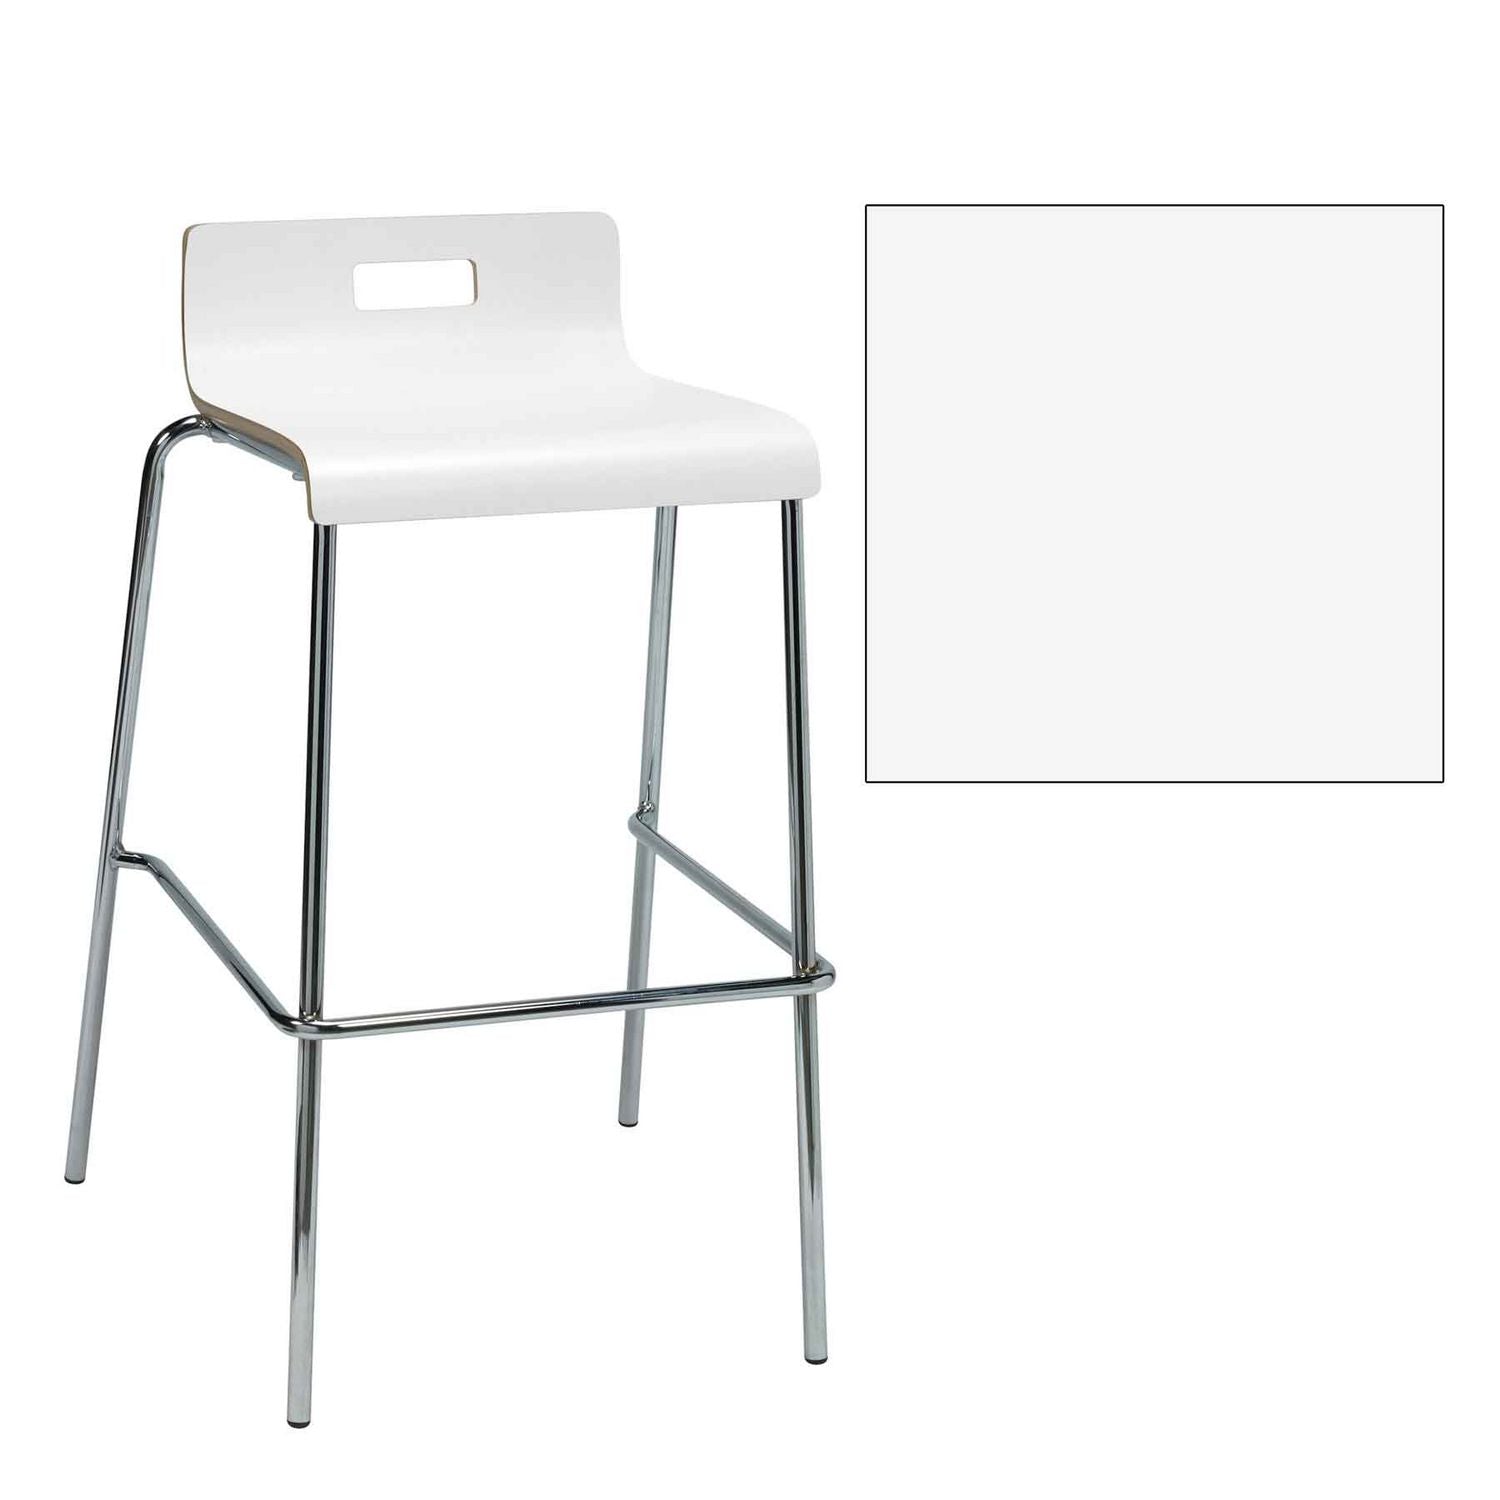 pedestal-bistro-table-with-four-white-jive-series-barstools-round-36-dia-x-41h-studio-teak-ships-in-4-6-business-days_kfi840031900142 - 4